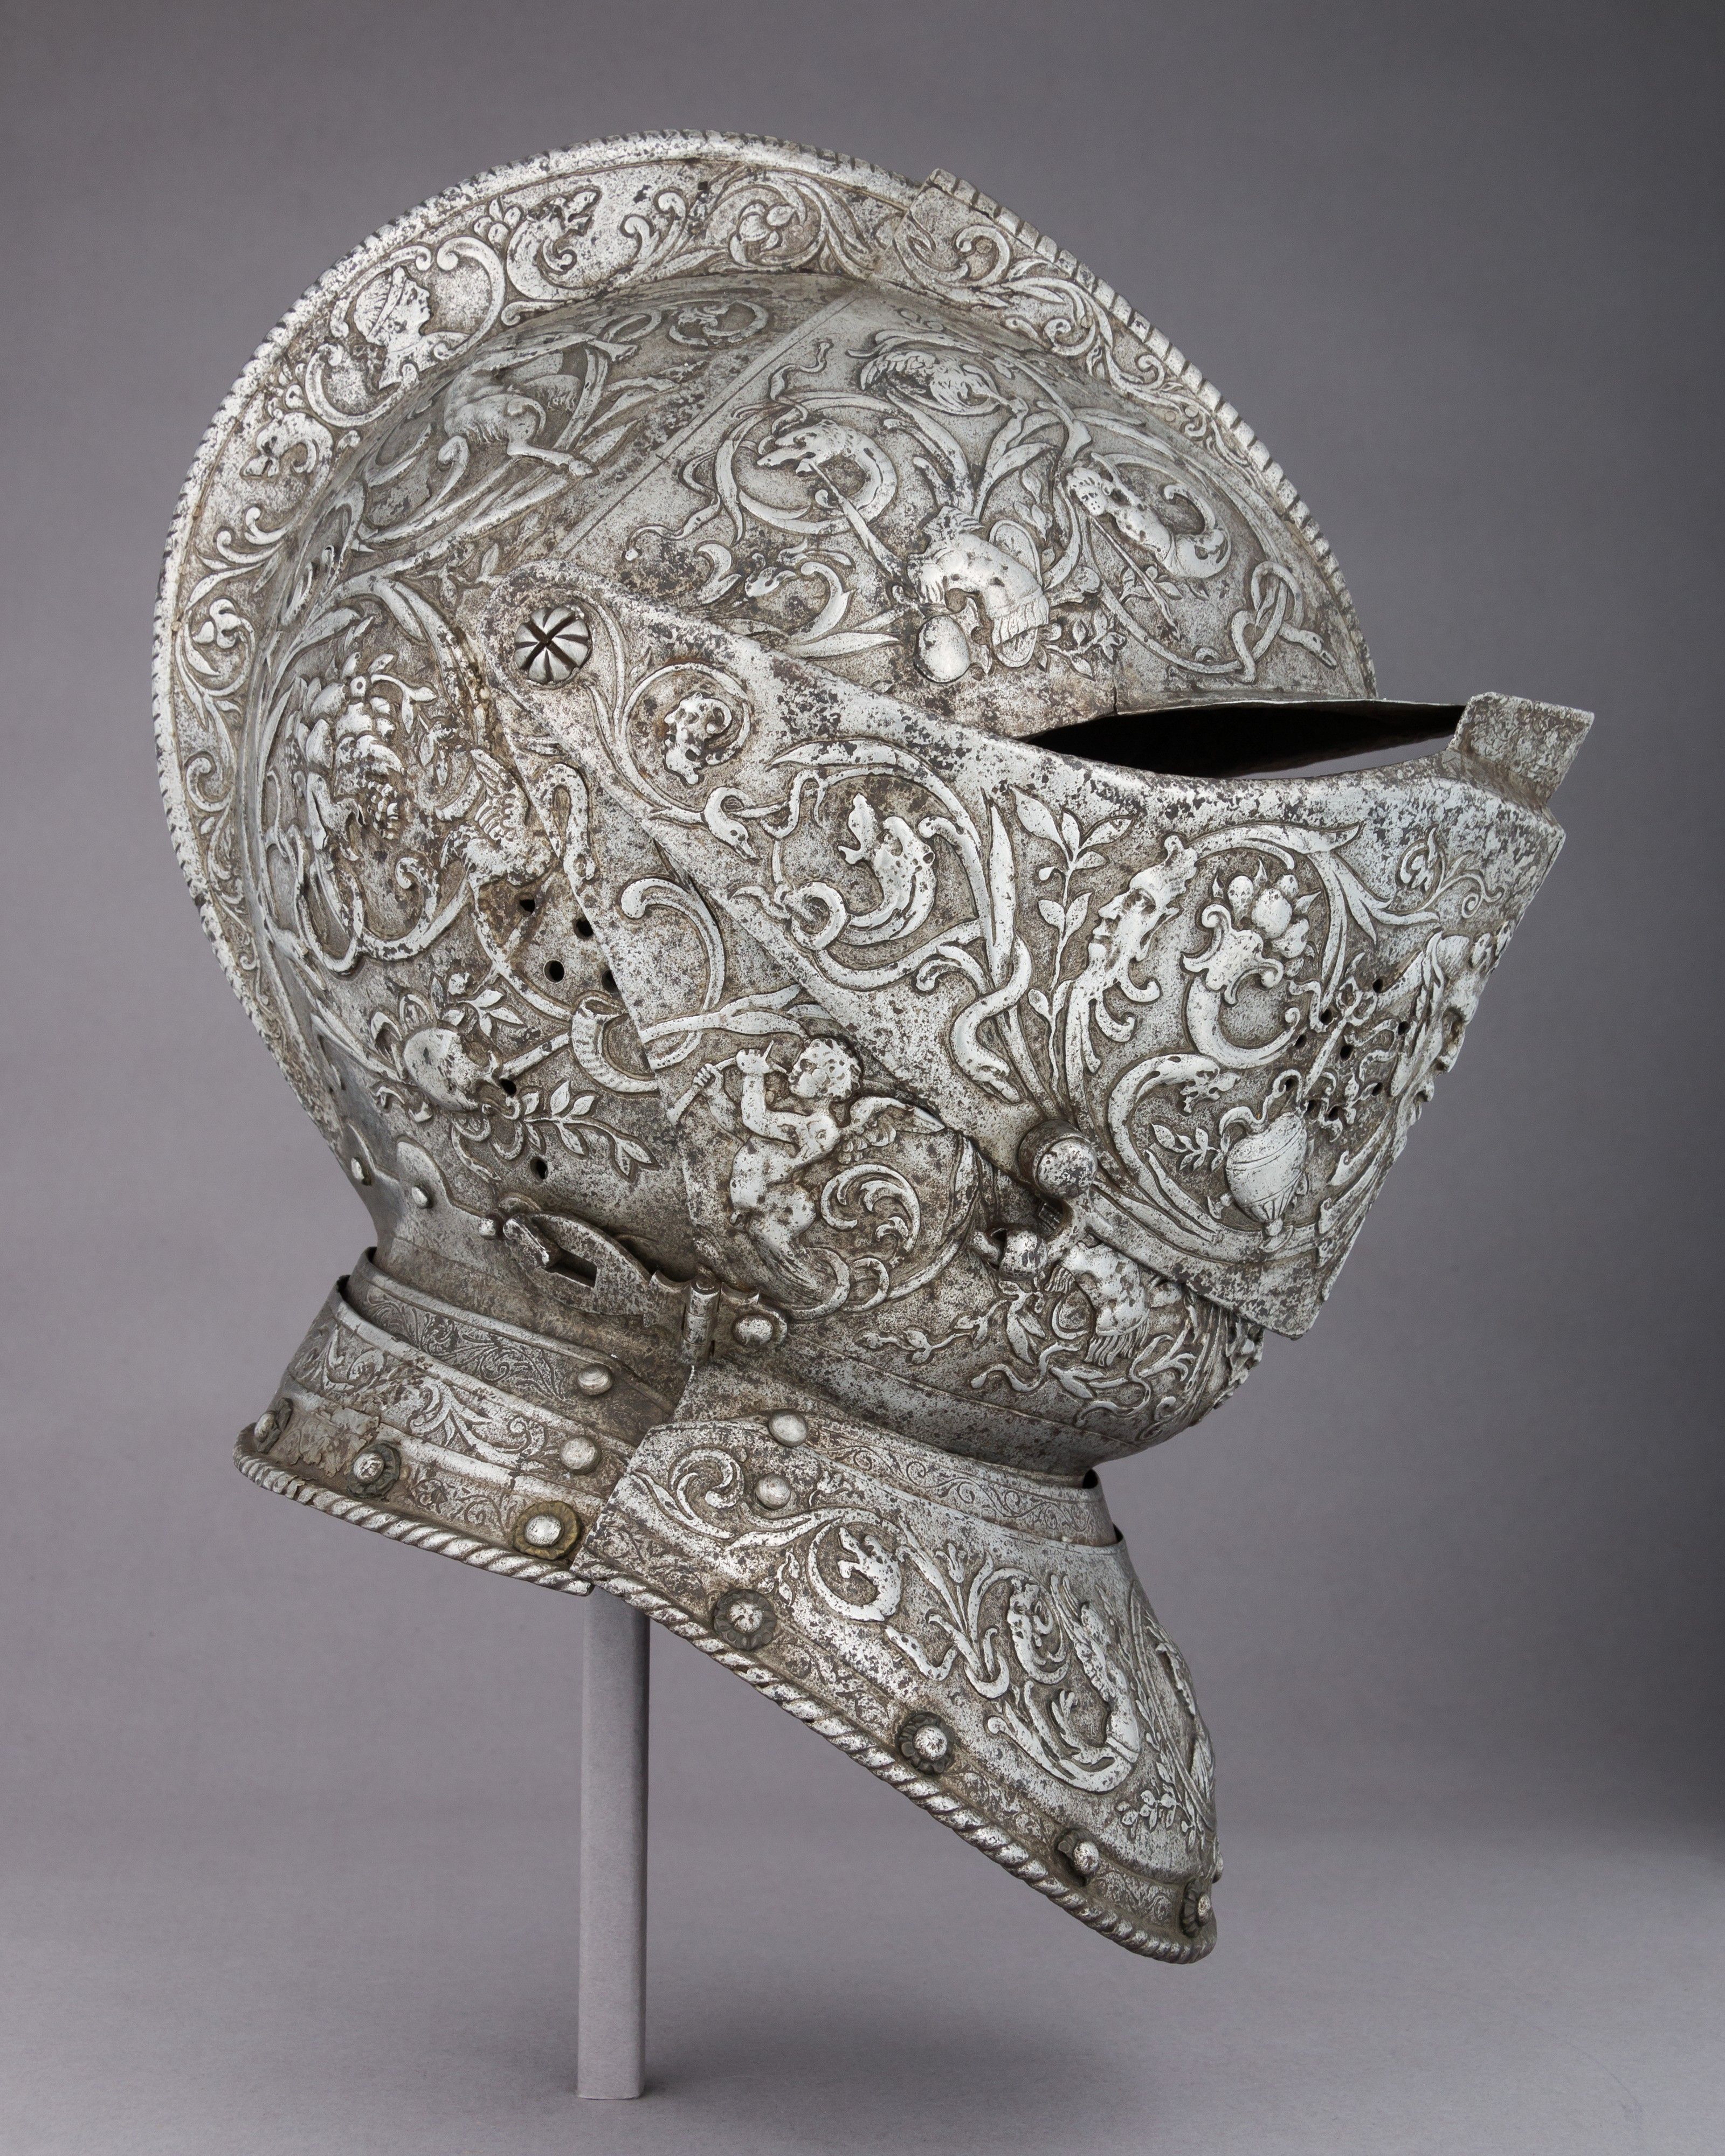 General 3200x4000 helmet medieval medieval clothes engraving armor portrait display